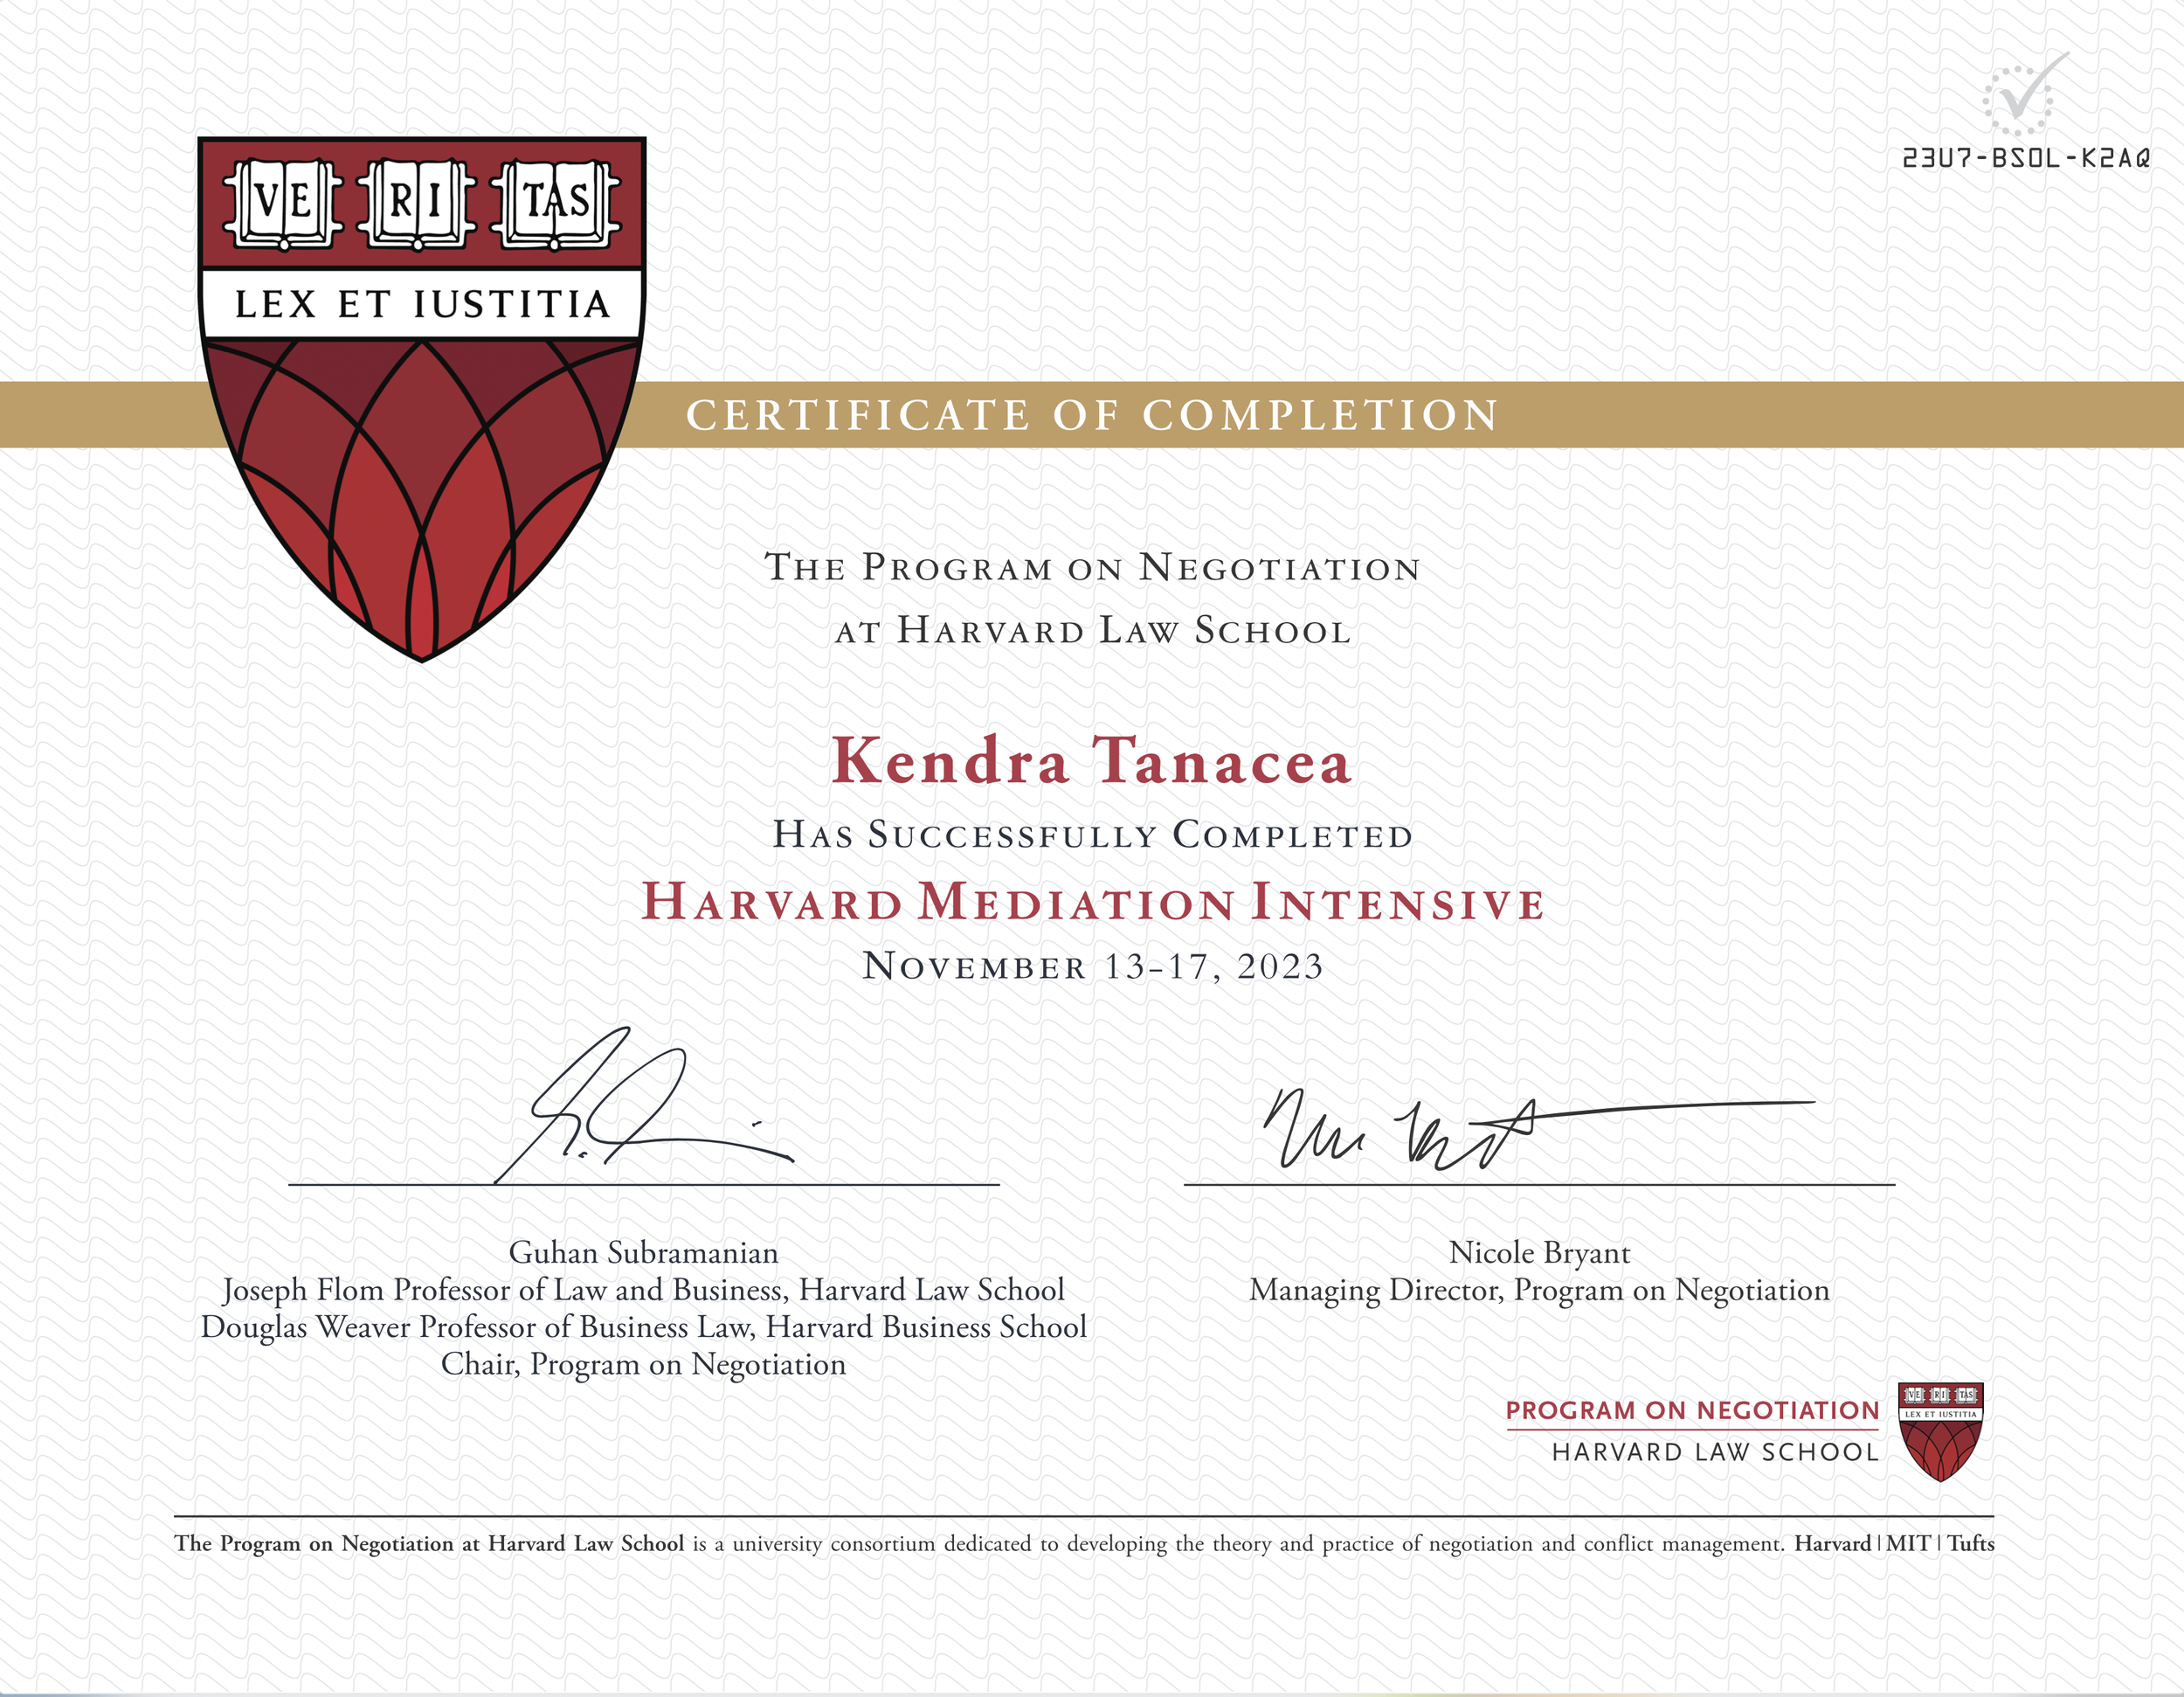 Harvard Mediation Intensive Certificate of Completion.png